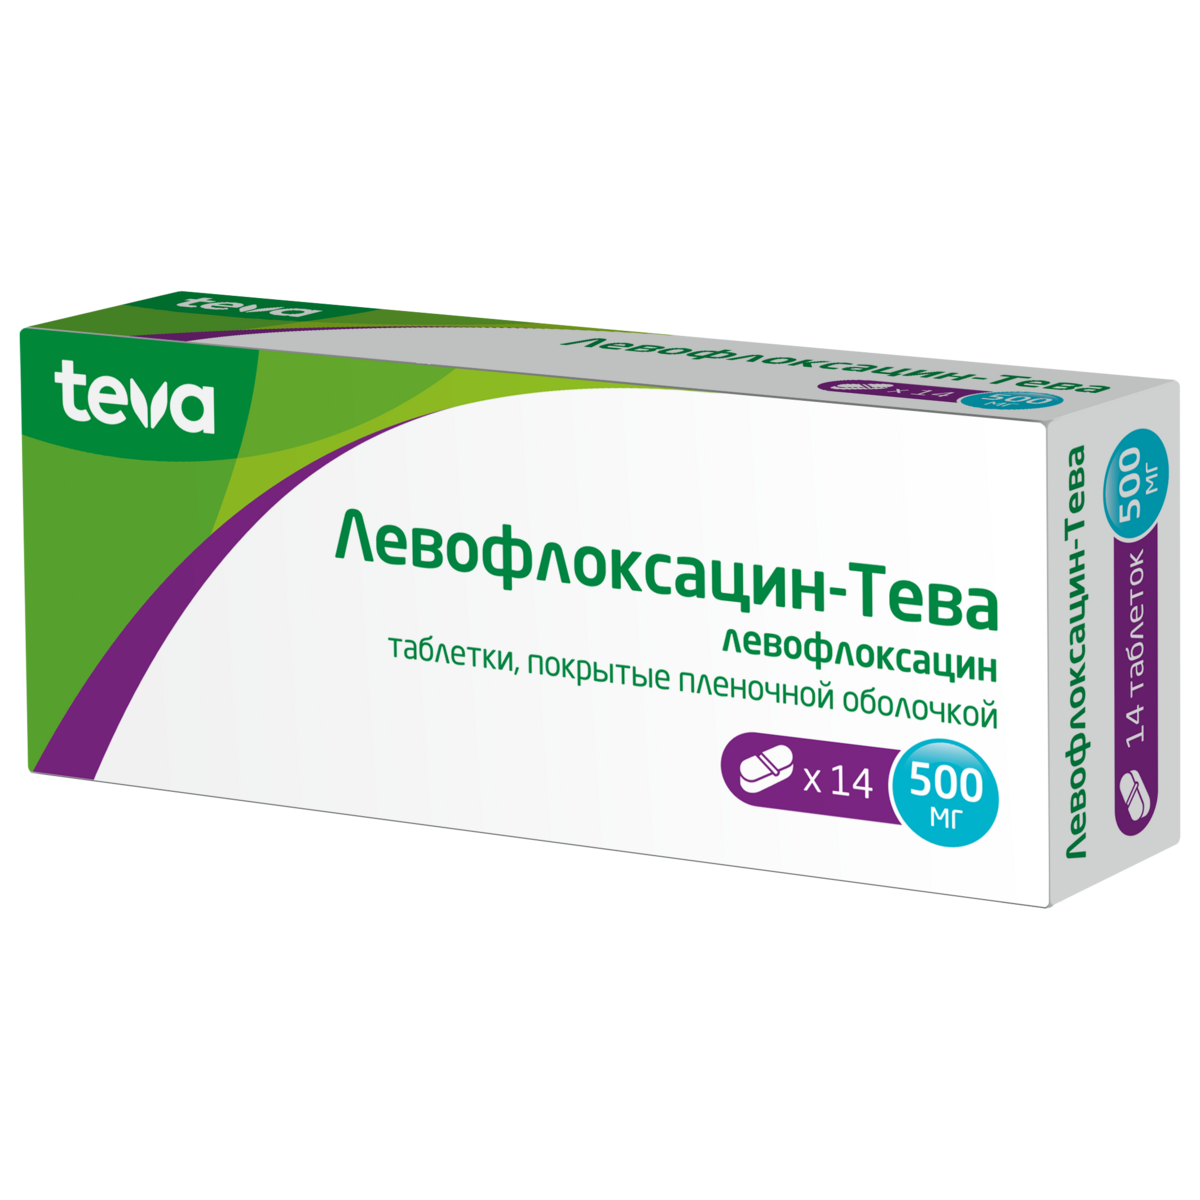 Левофлоксацин-Тева 500. Тербинафин 250 мг. Кларитромицин Тева 500. Левофлоксацин таблетки 500 мг. Левофлоксацин относится к группе